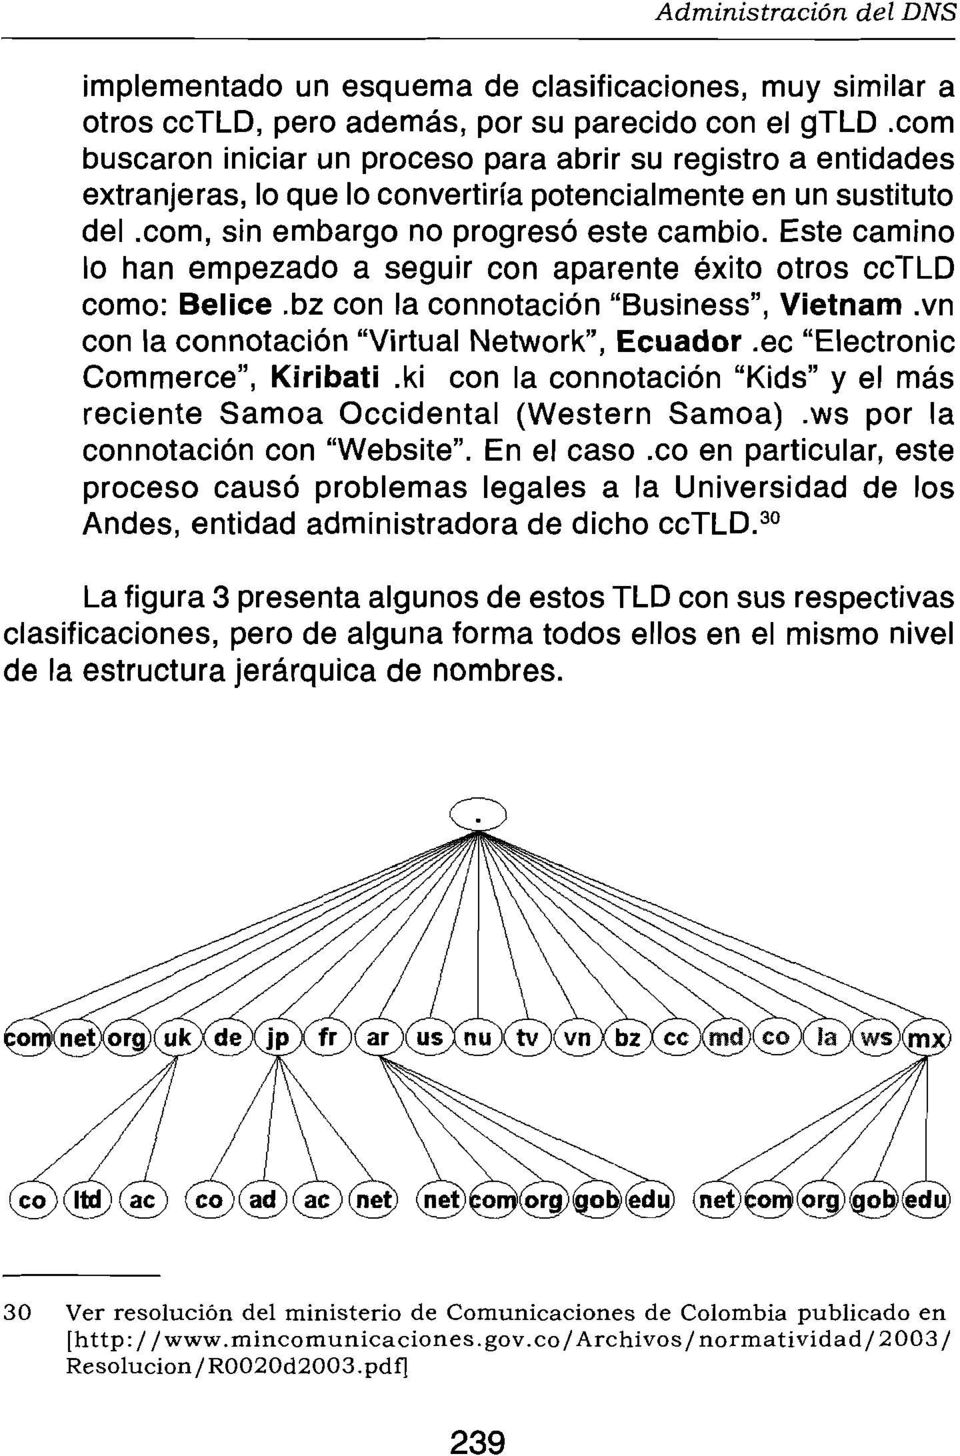 Este camino lo han empezado a seguir con aparente éxito otros cctld como: Belice.bz con la connotación "Business", Vietnam.vn con la connotación "Virtual Network", Ecuador.